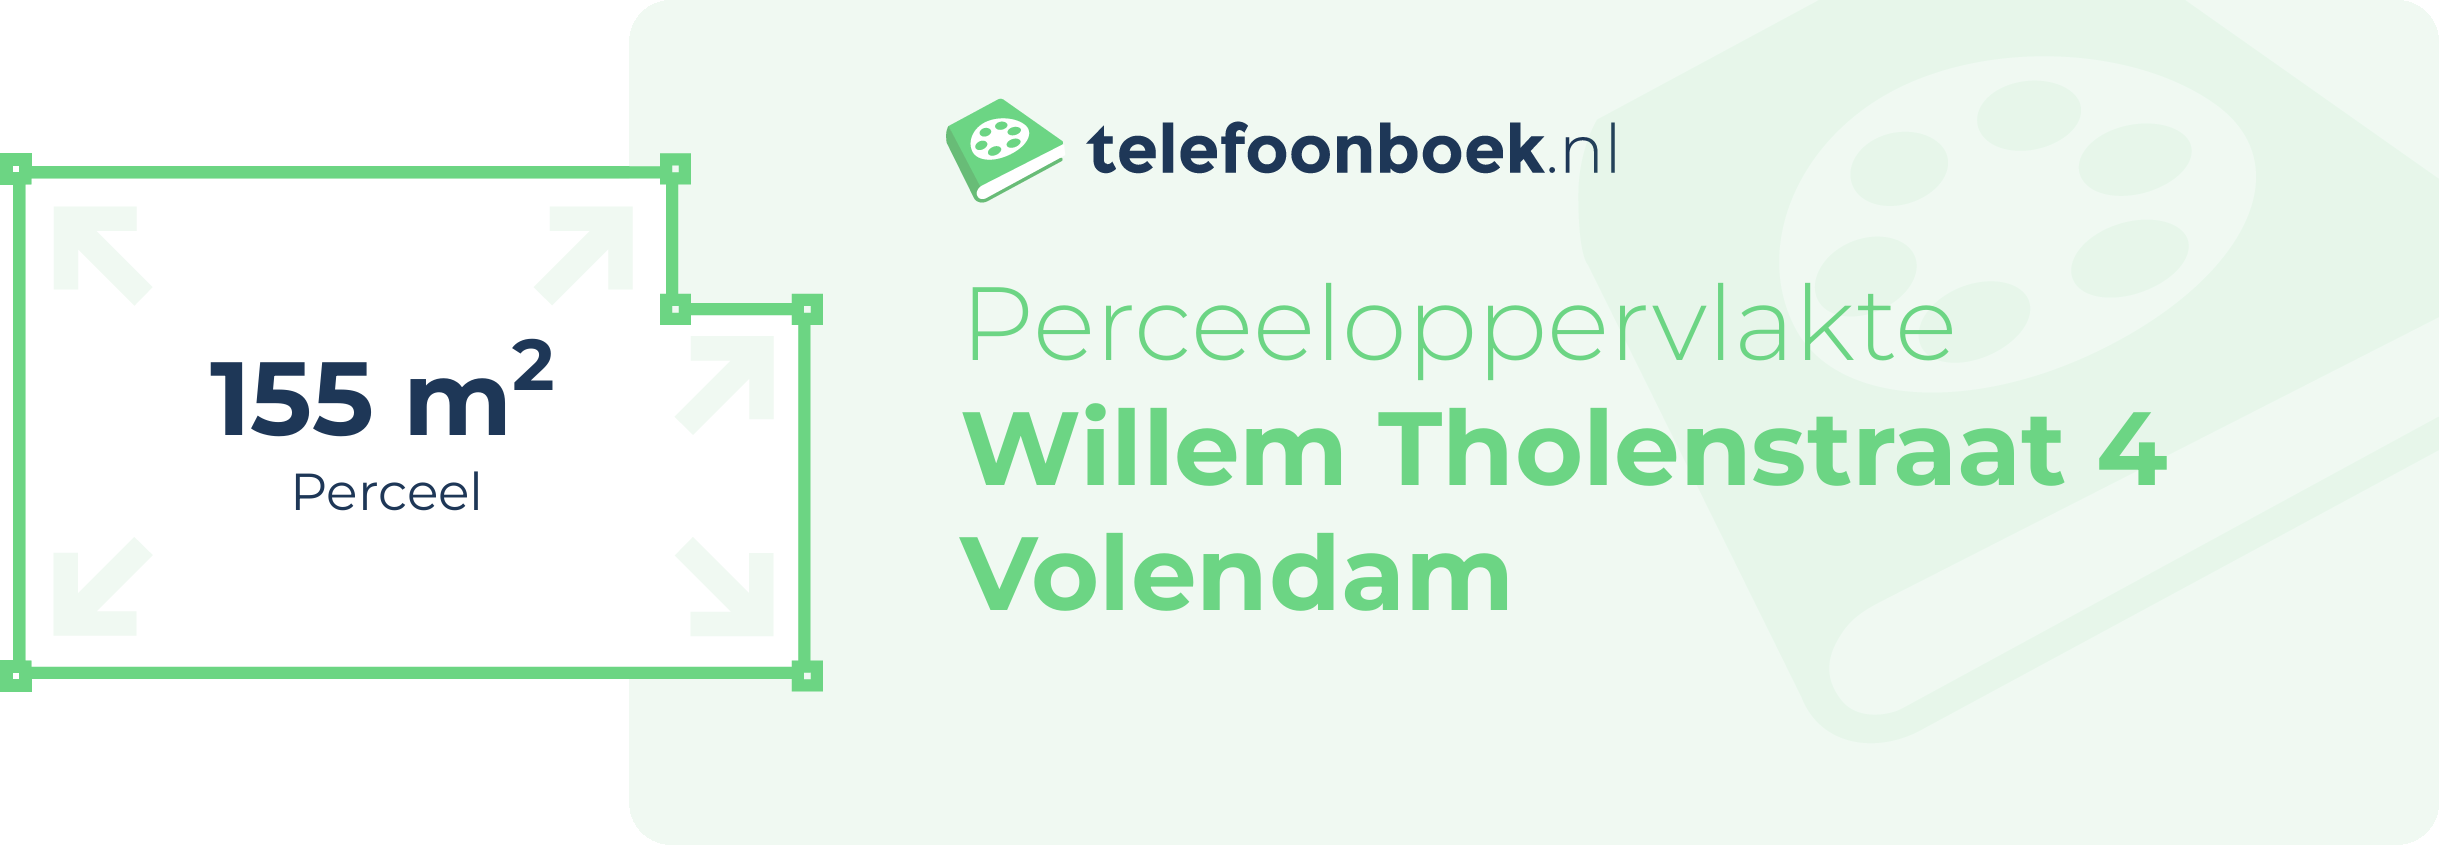 Perceeloppervlakte Willem Tholenstraat 4 Volendam